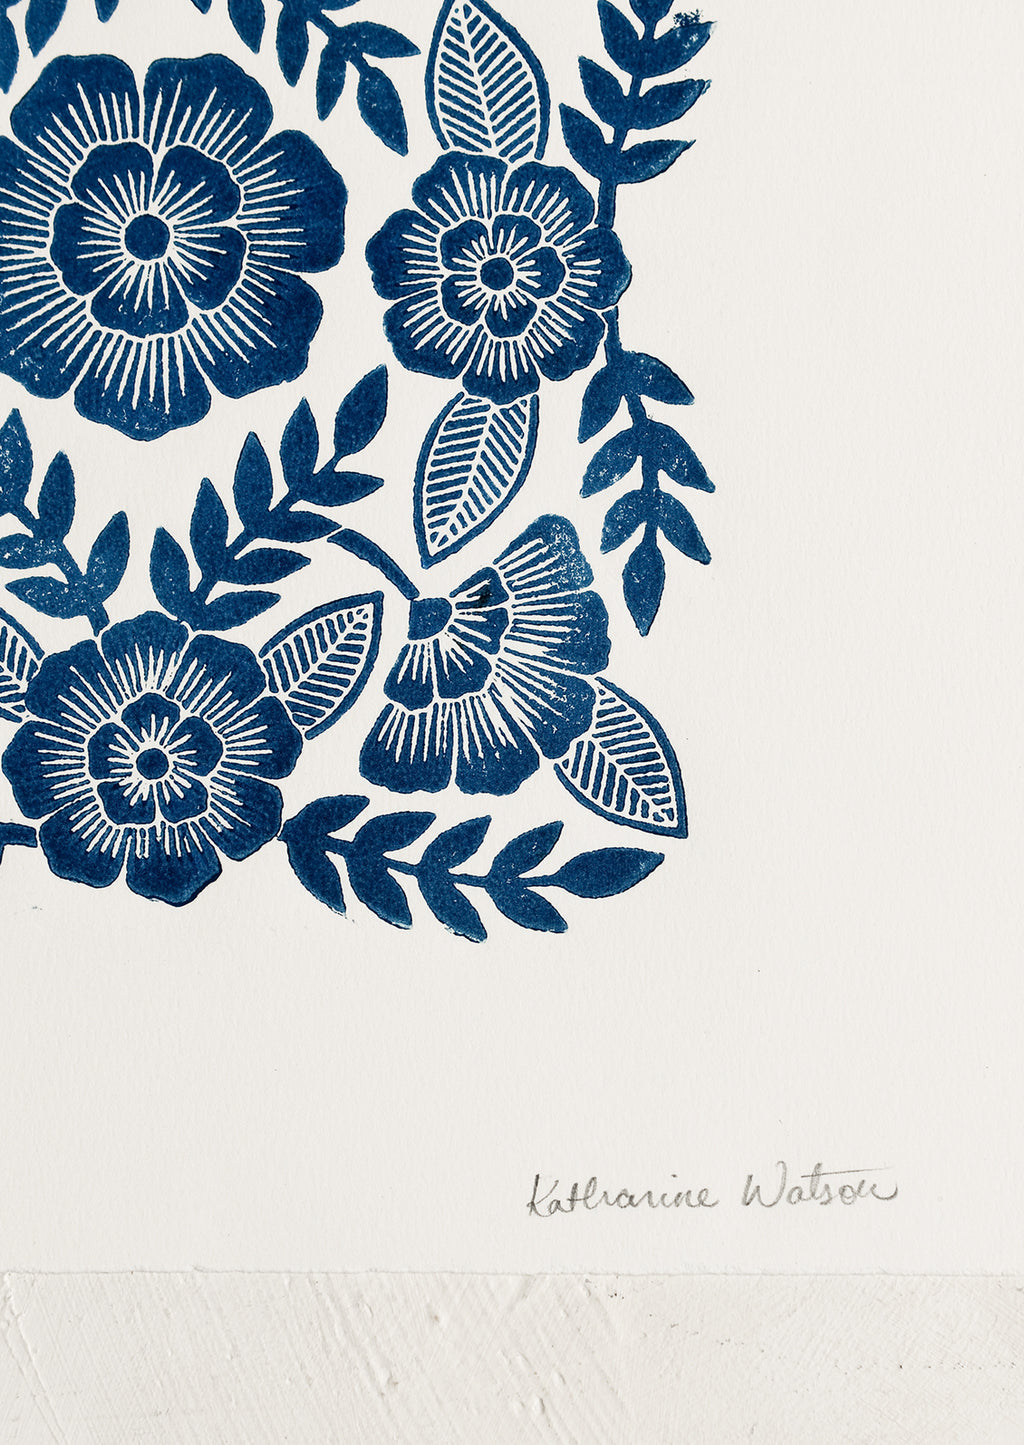 2: A woodcut floral print block print in indigo ink.